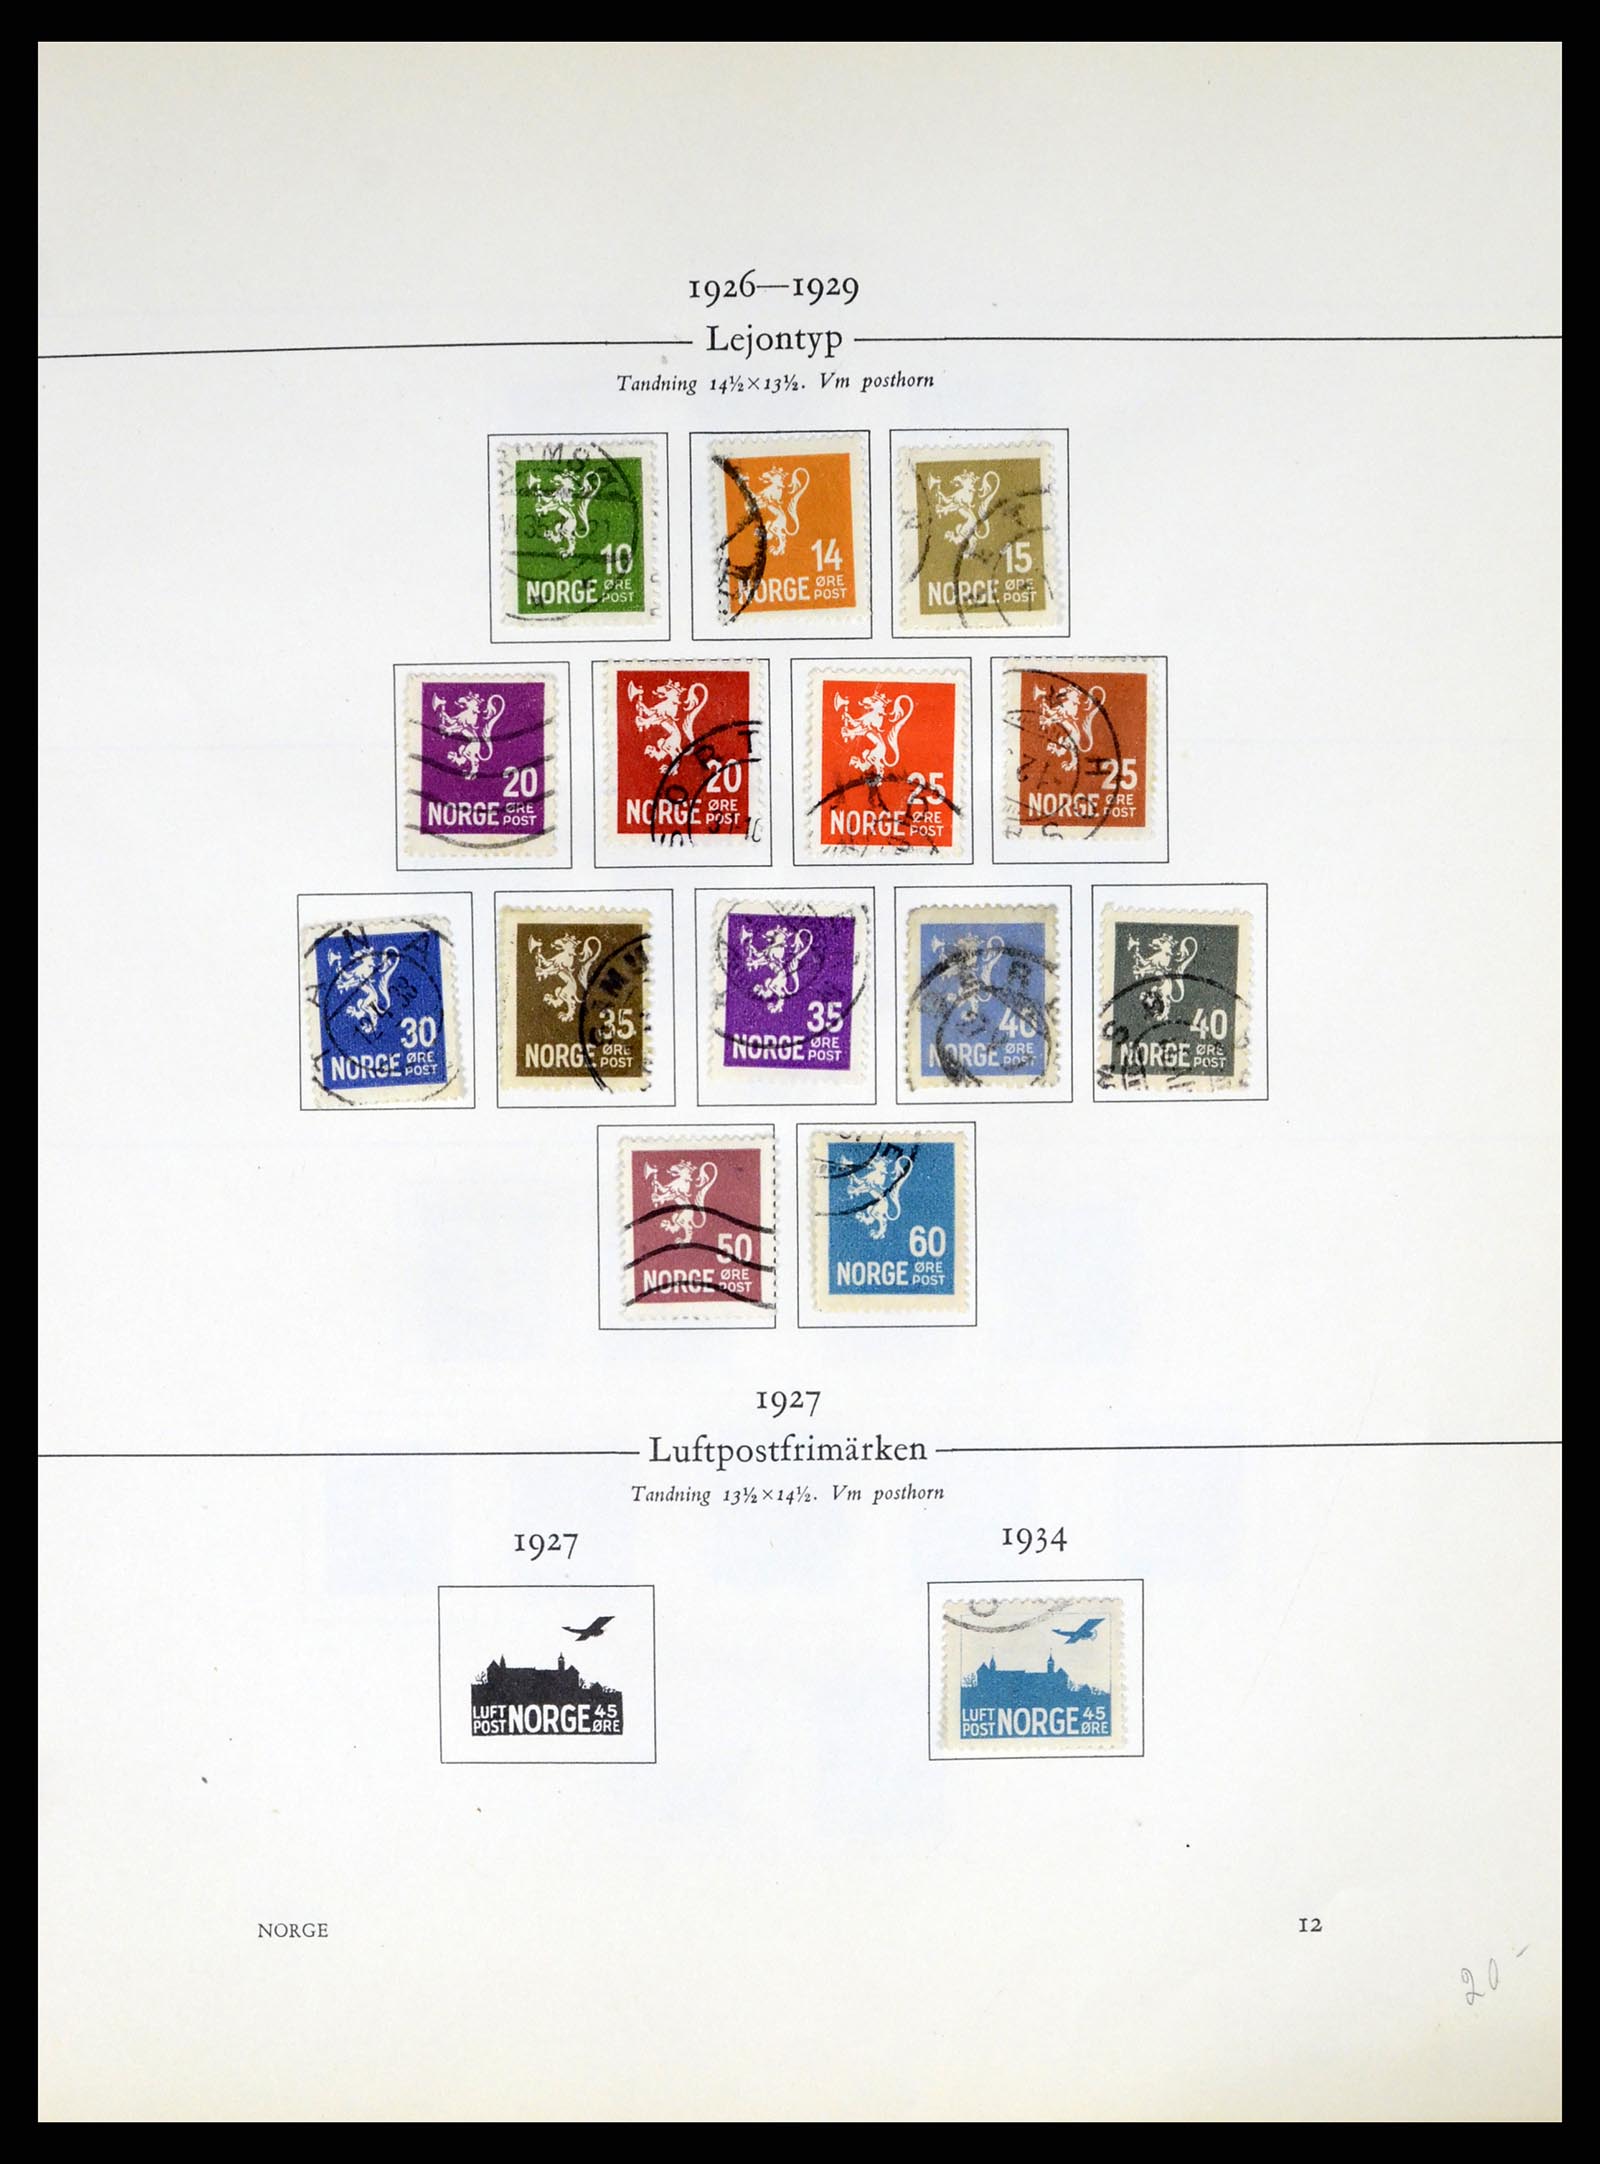 37387 012 - Stamp collection 37387 Scandinavia 1851-1960.